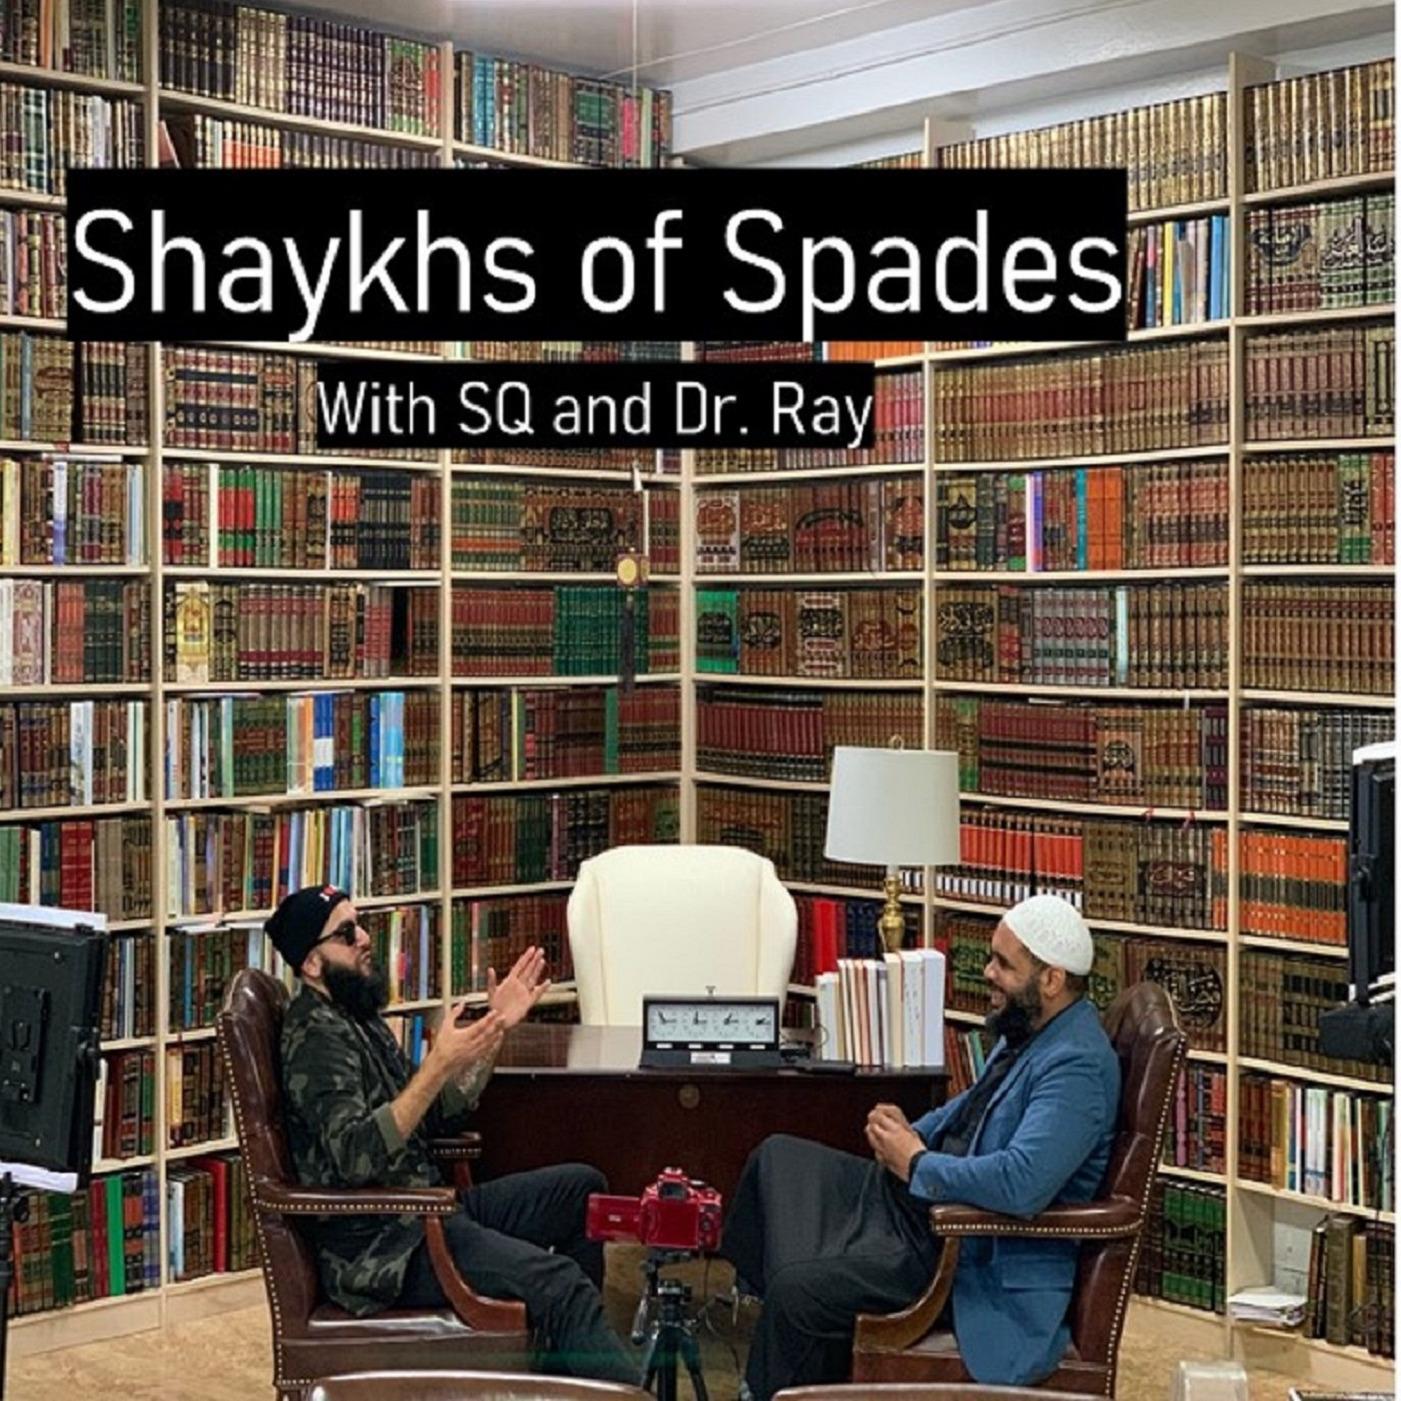 Shaykhs of Spades